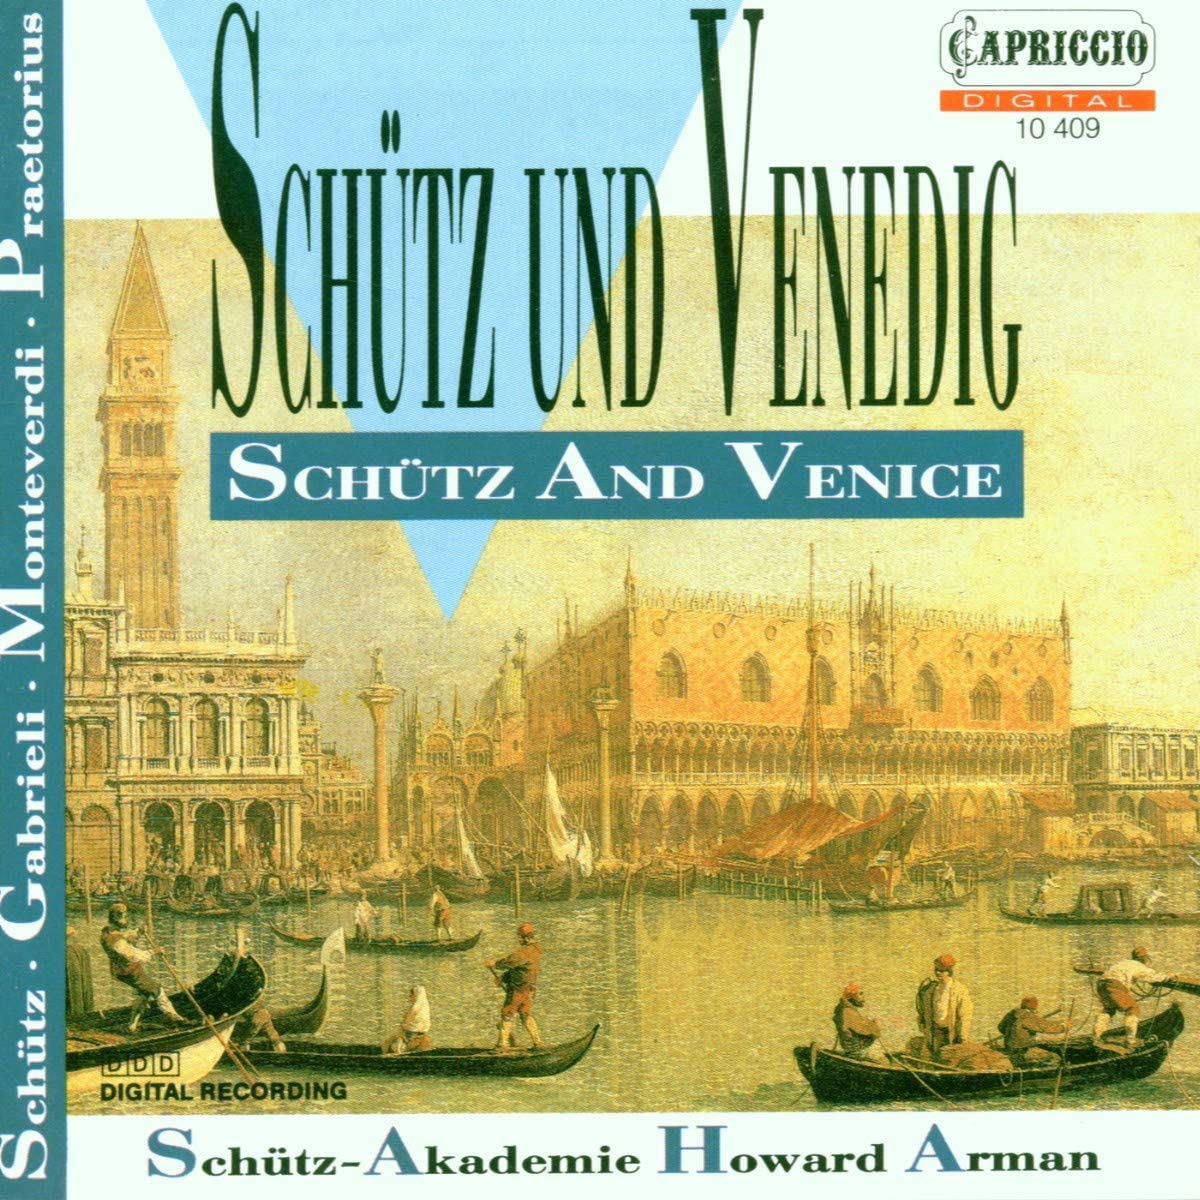 Schütz and Venice